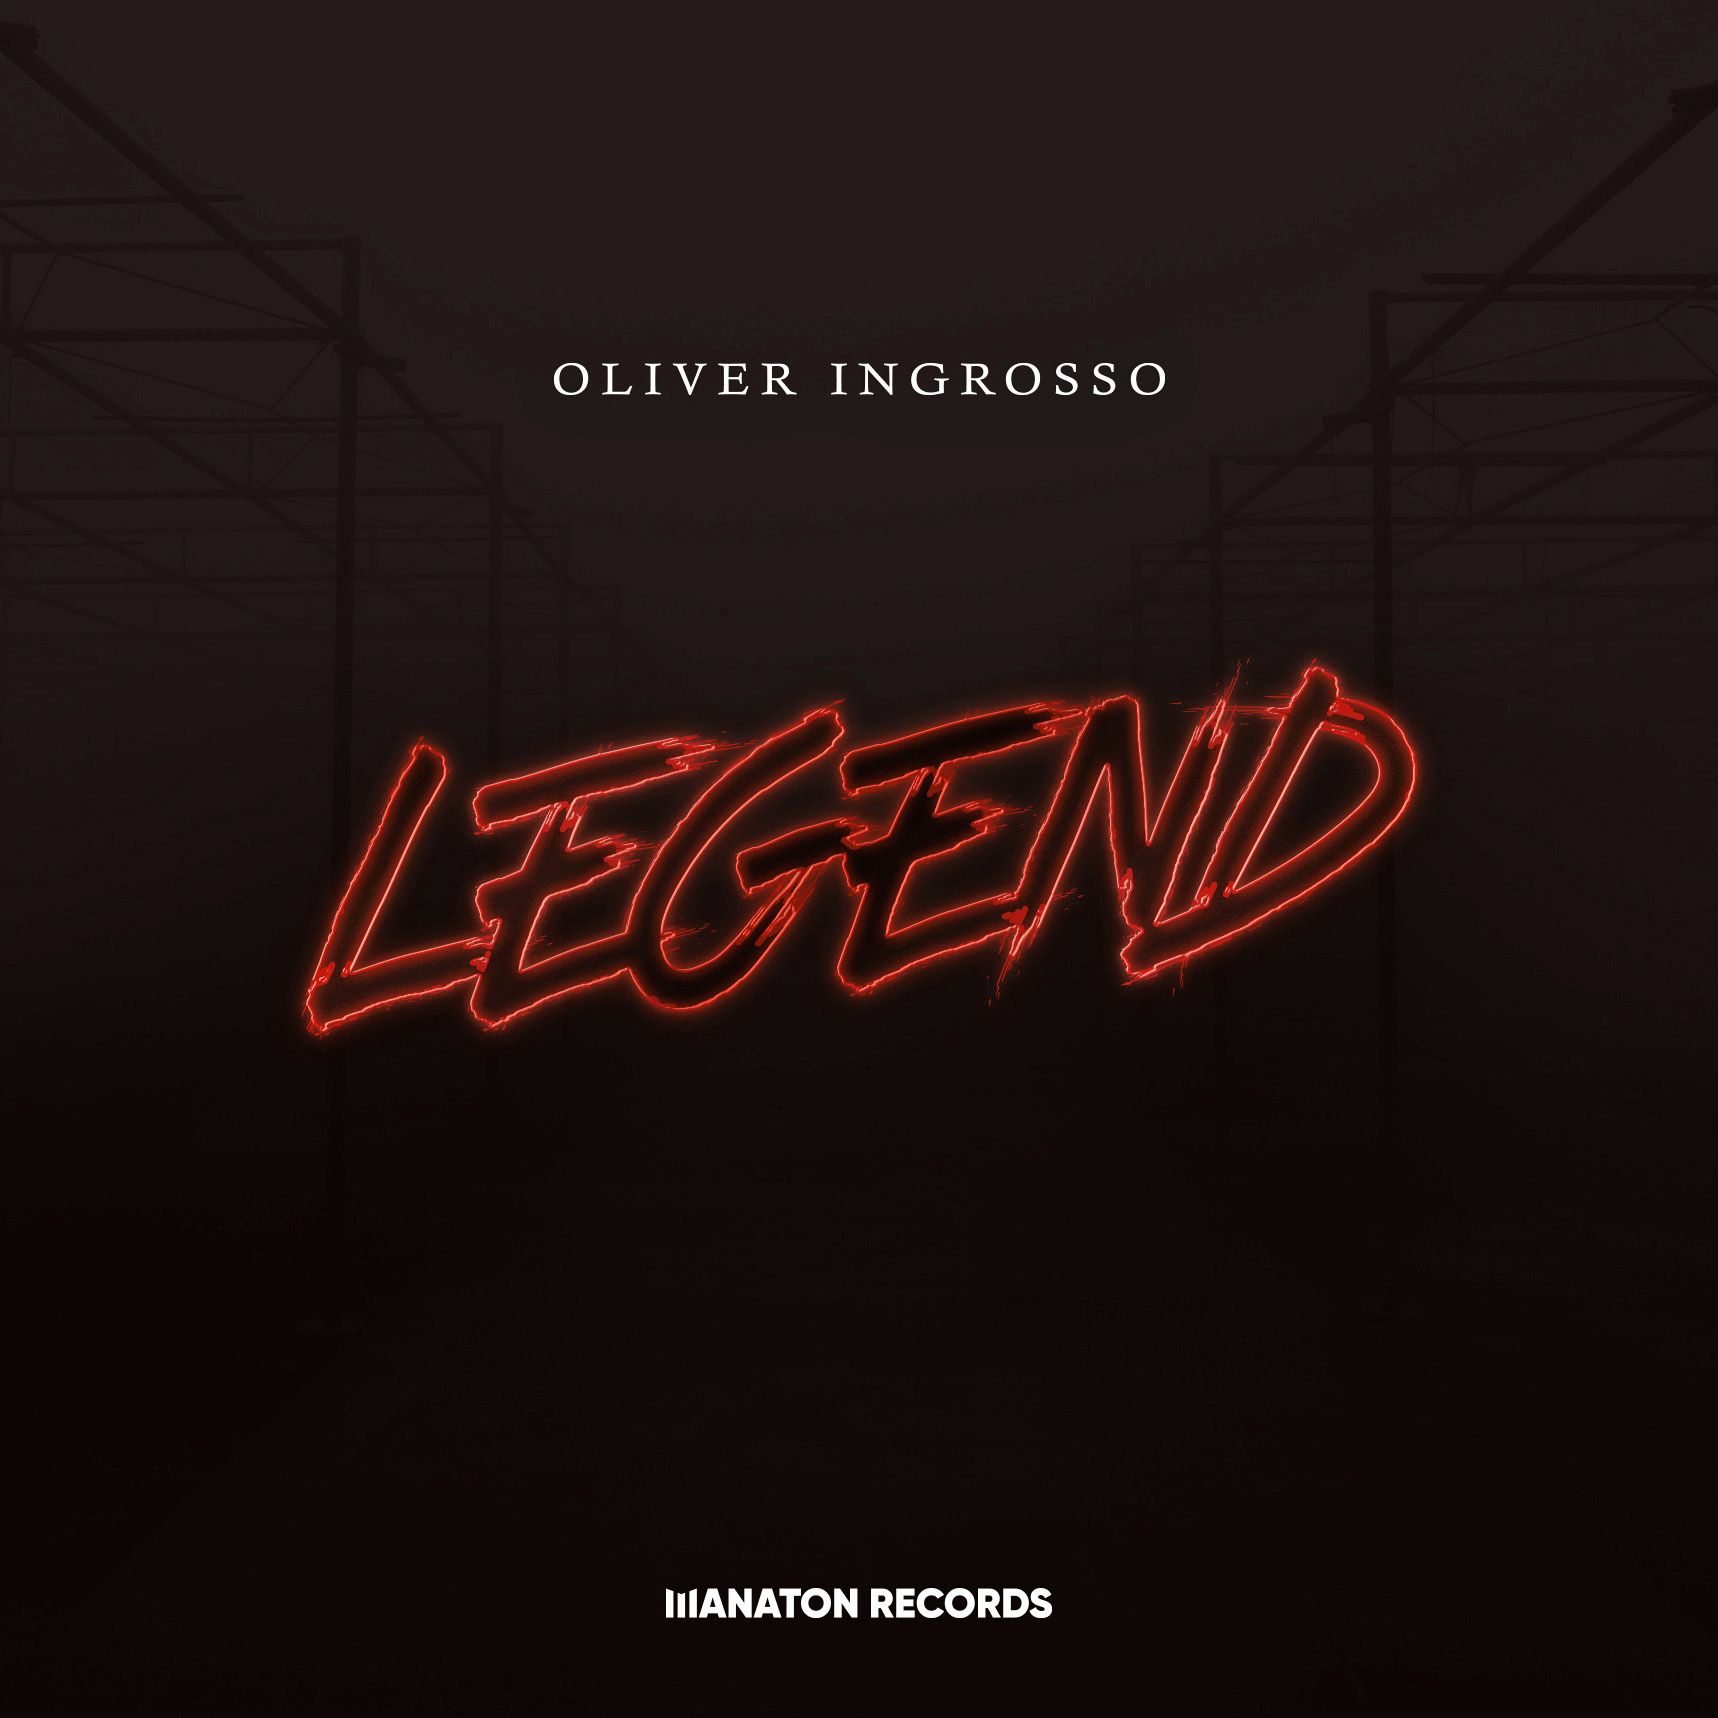 oliver_ingrosso_-_legend_manaton_records.jpg